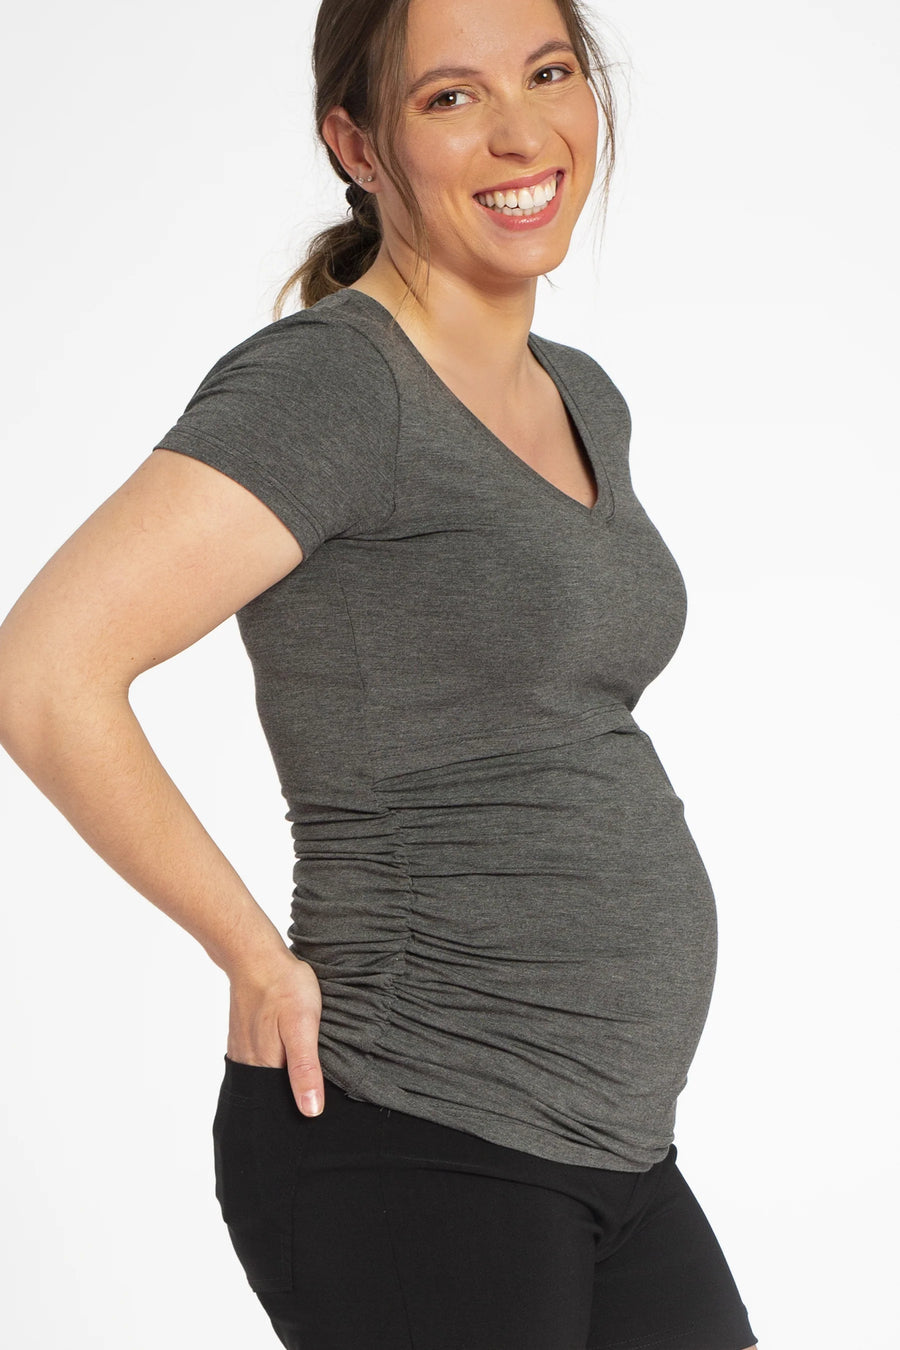 Ruched Maternity T-shirts  plain maternity t shirts wholesale